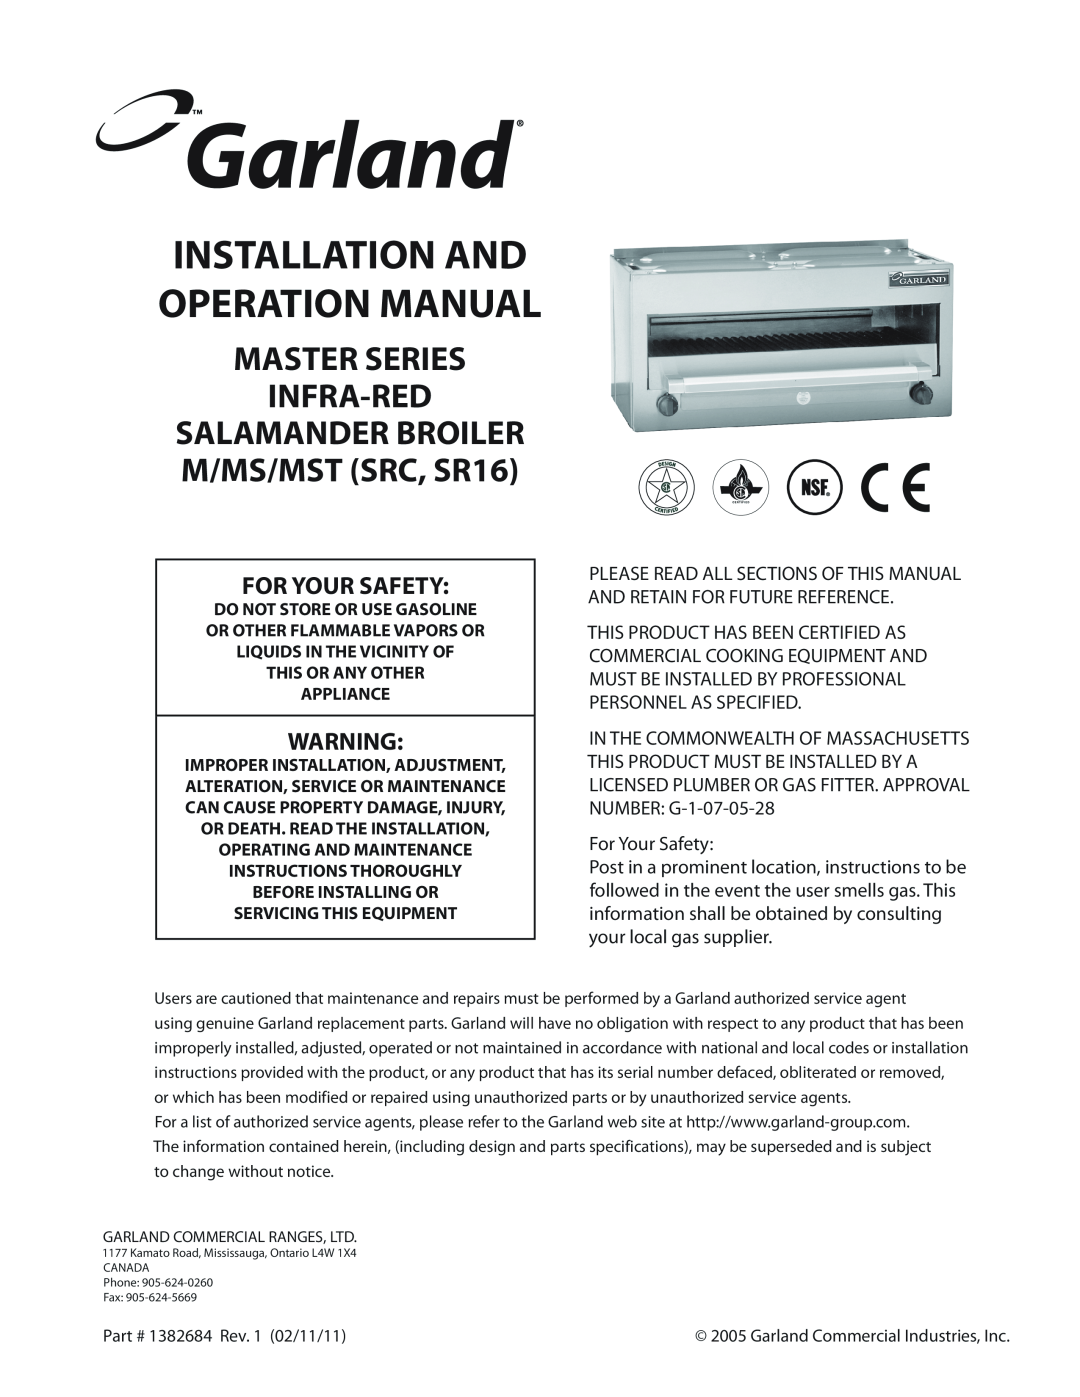 Garland operation manual Master Series Infra-Red, SALAMANDER BROILER M/MS/MST SRC, SR16, For Your Safety 